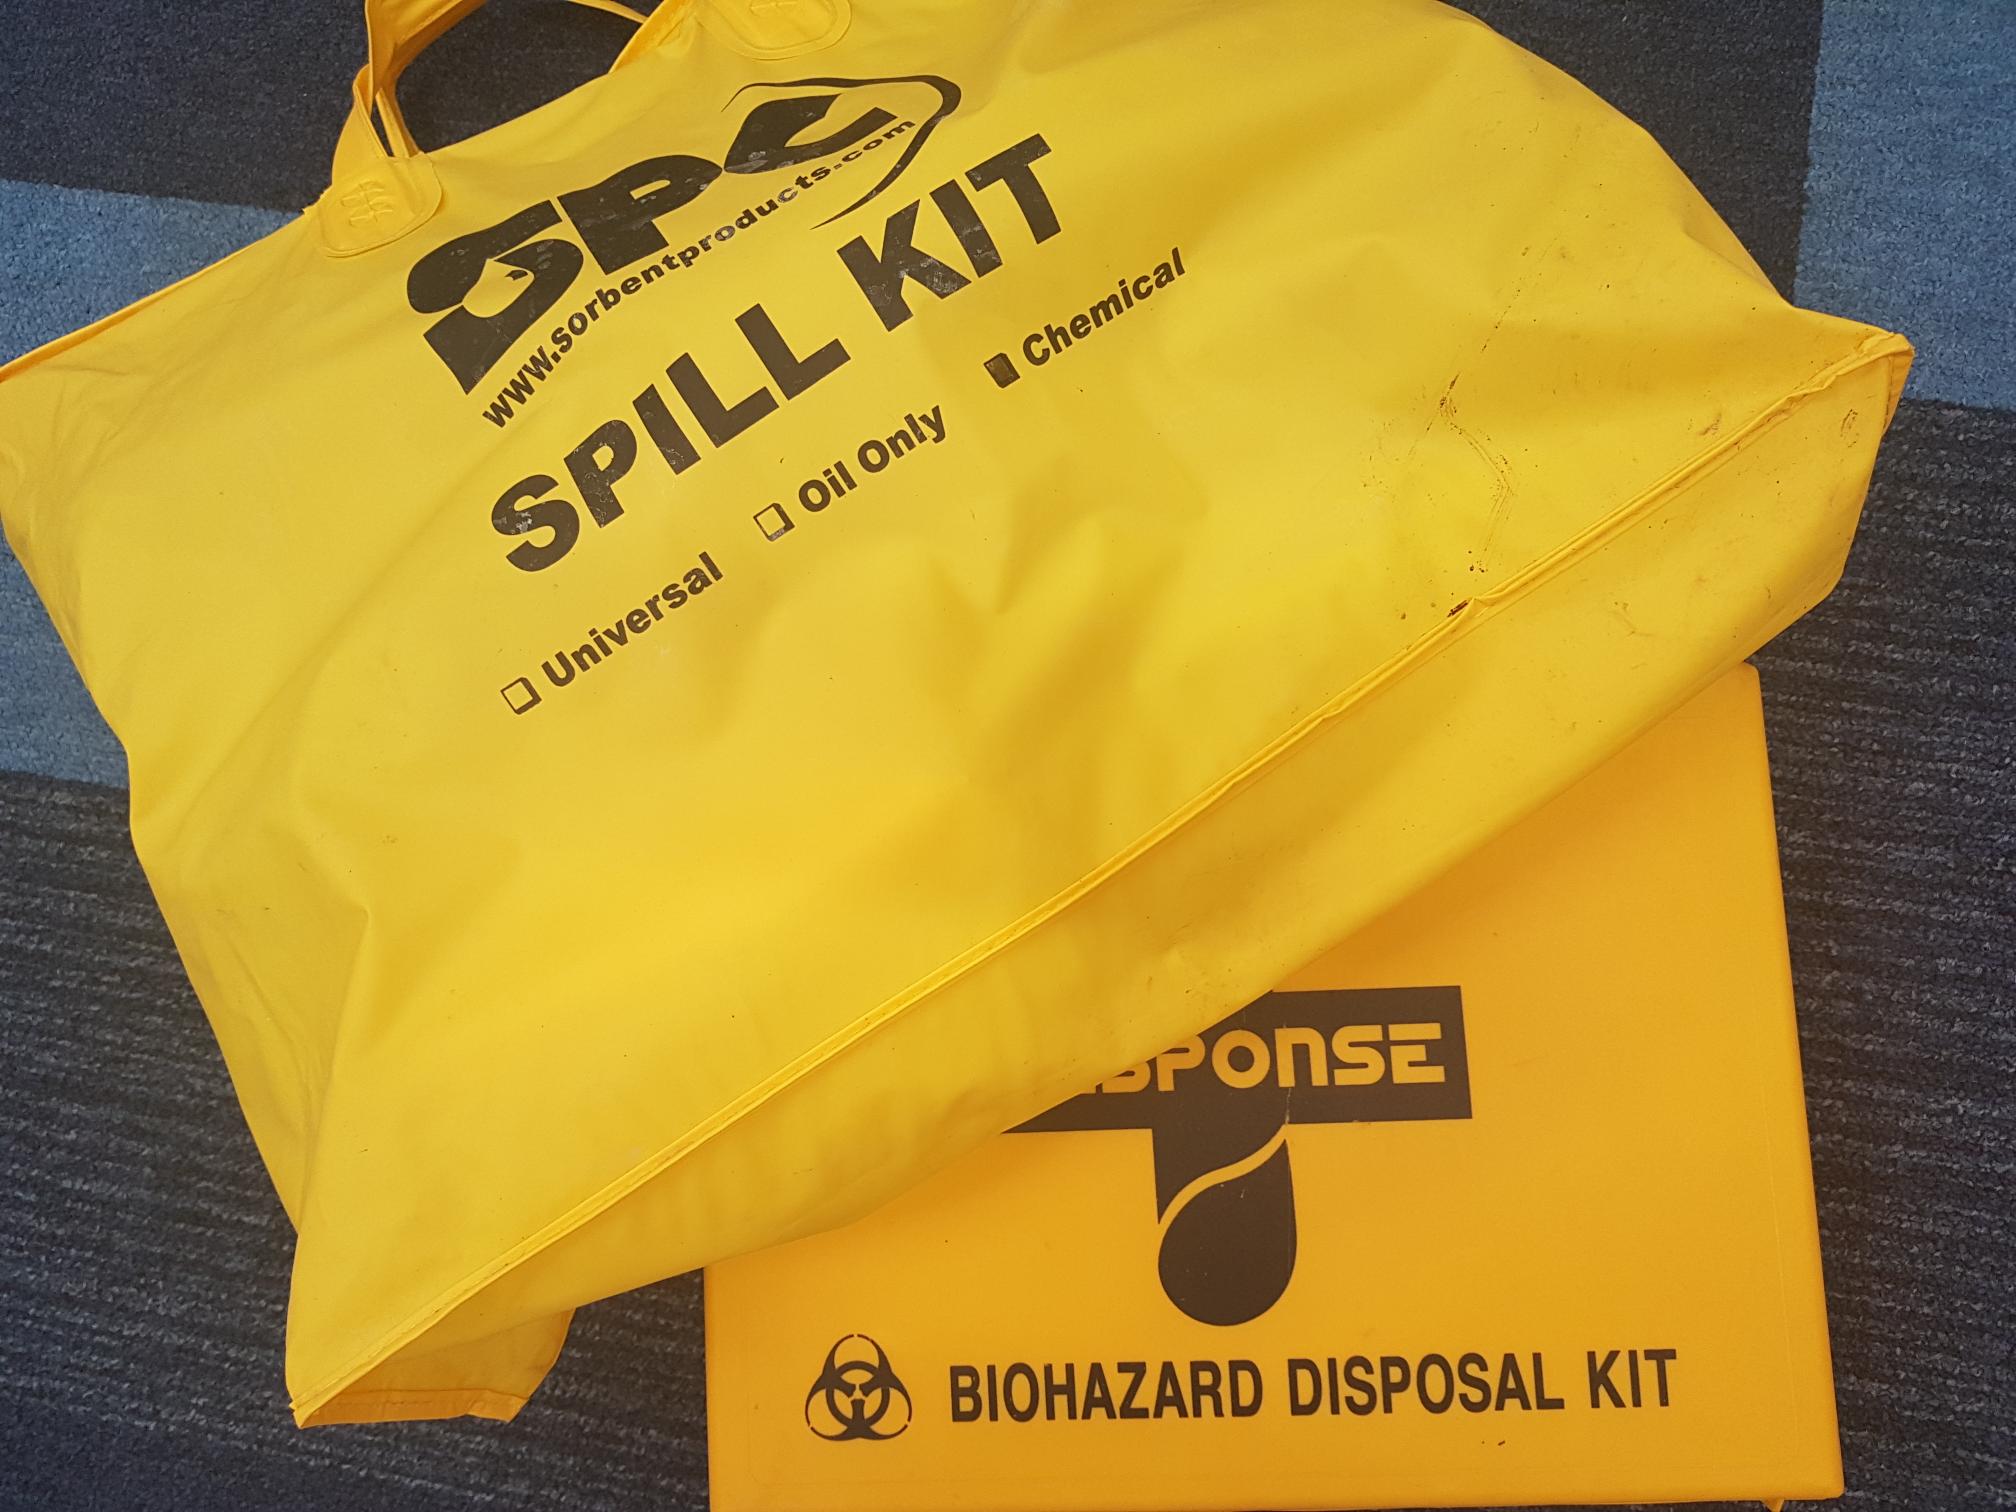 NEW build ALC 2a. Bio-hazard, Burns kit, spillage kit